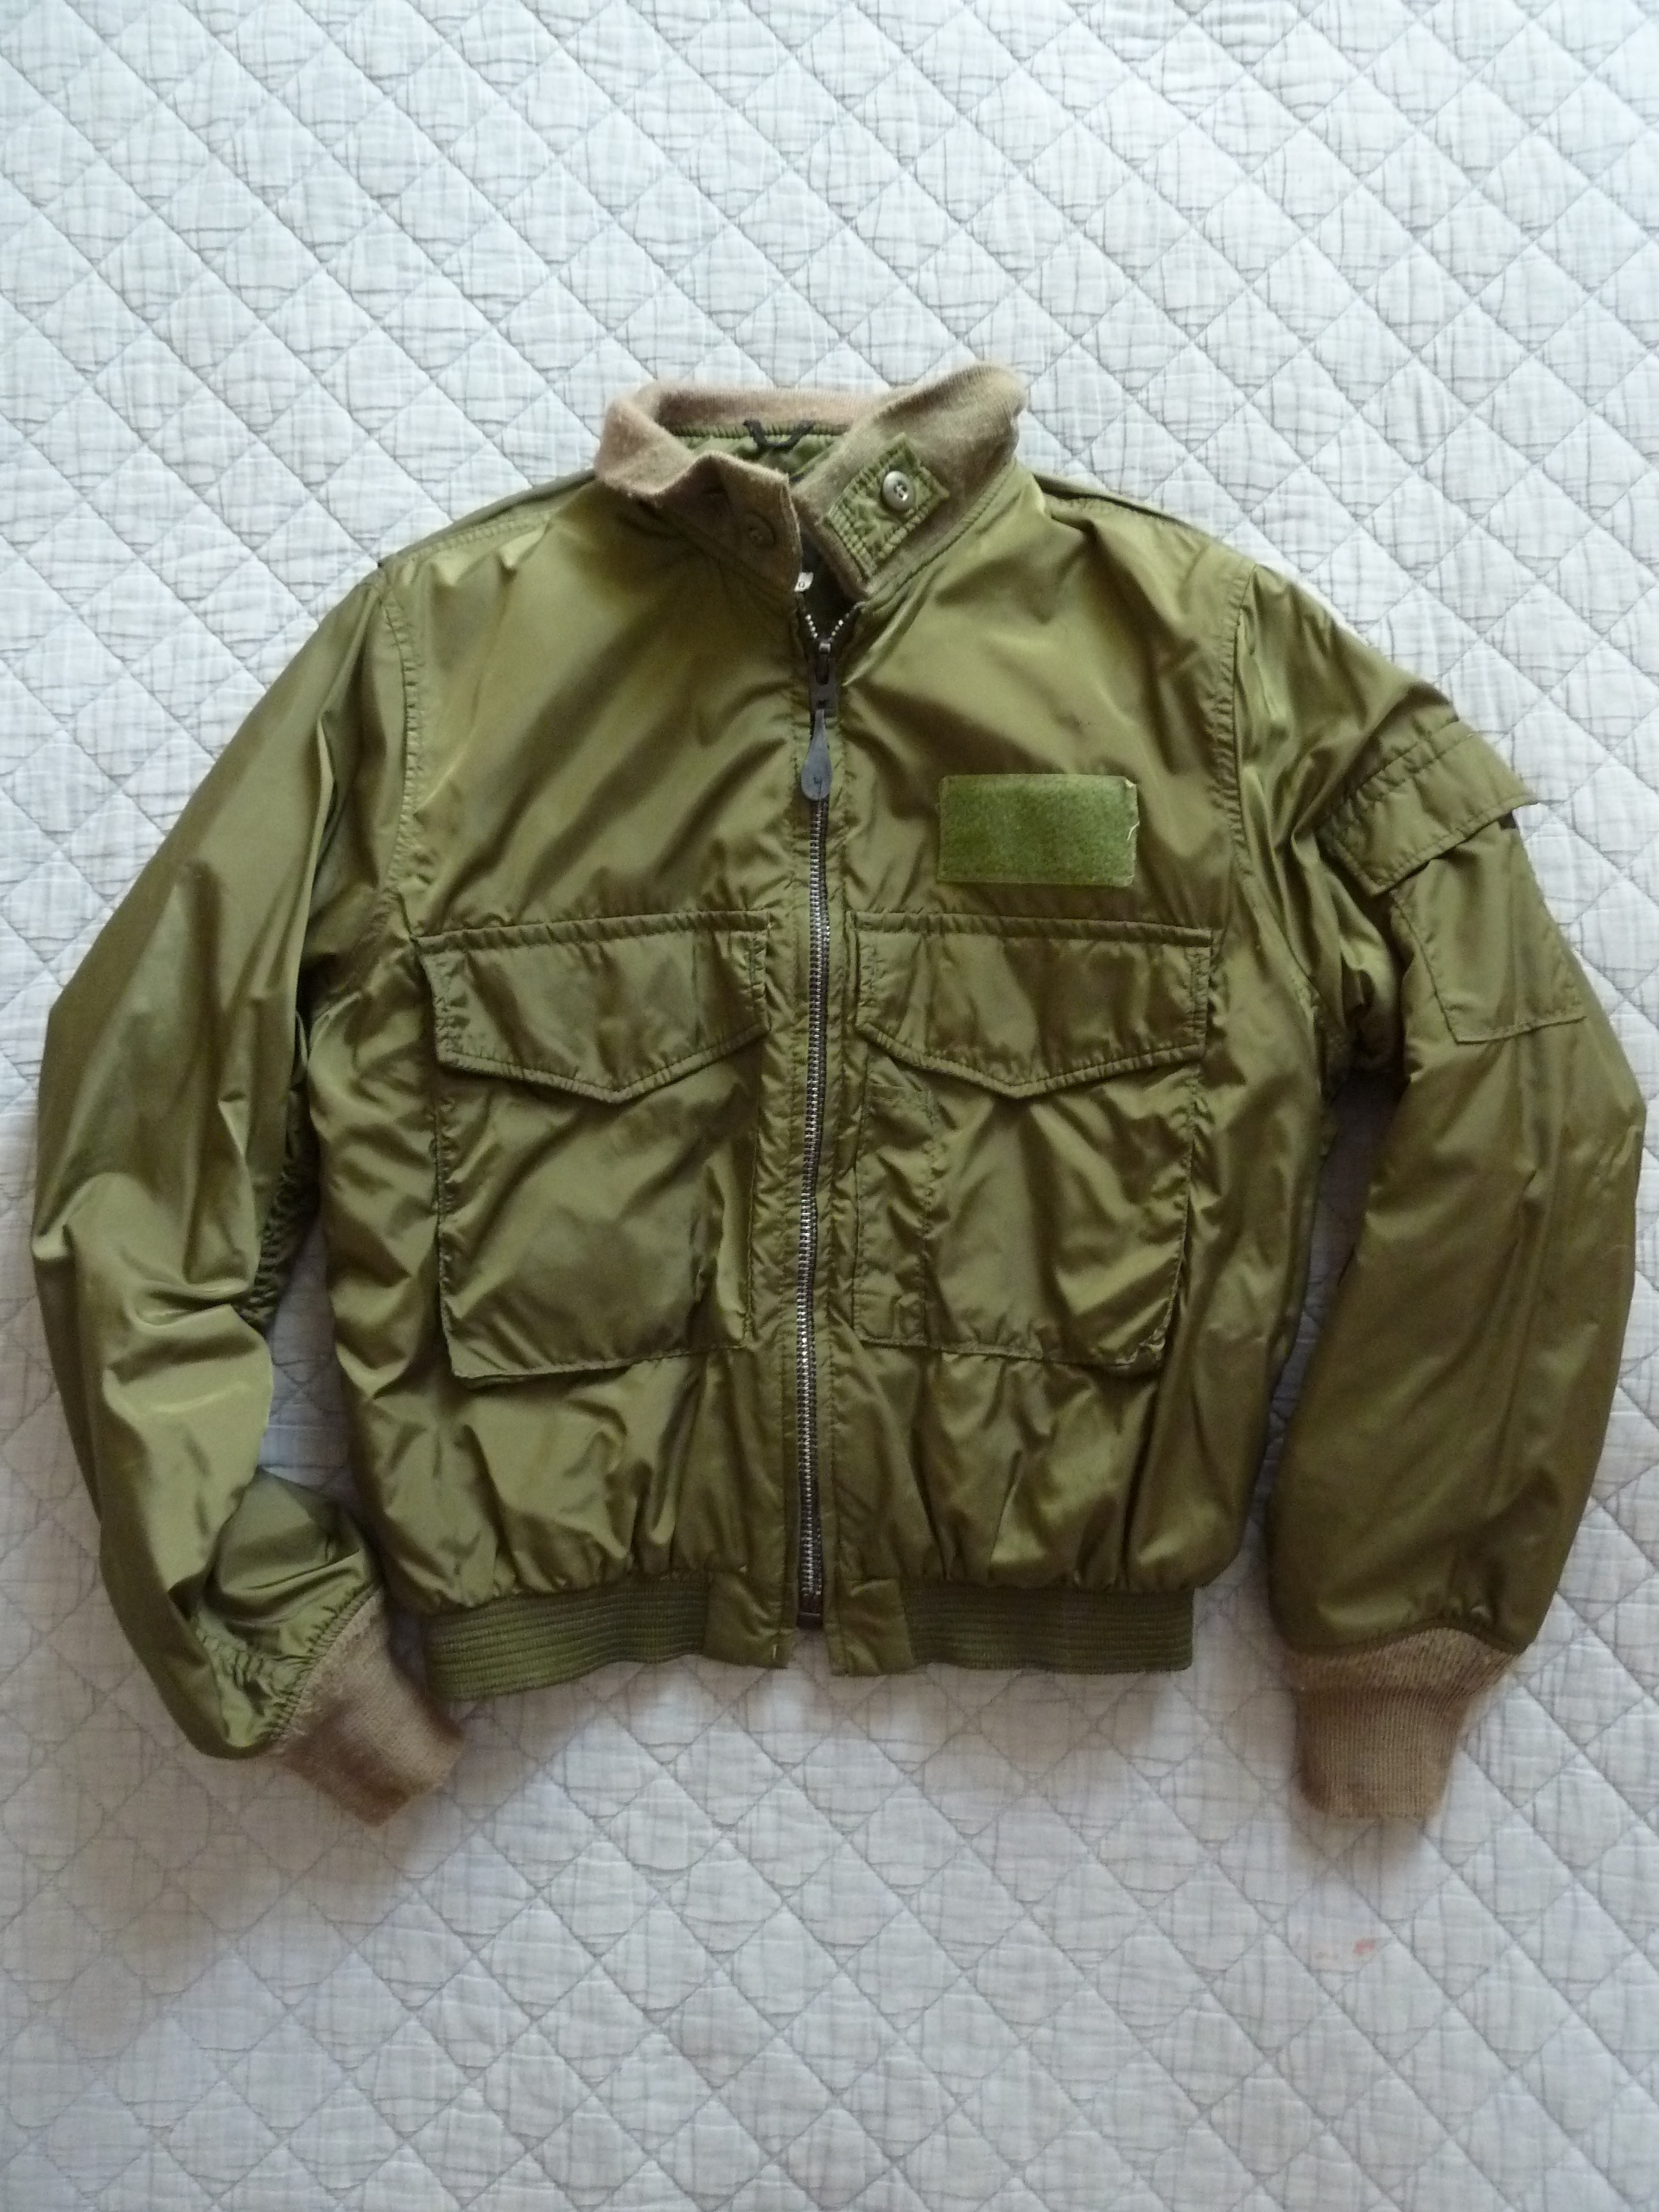 US Navy G8 WEP | Vintage Leather Jackets Forum